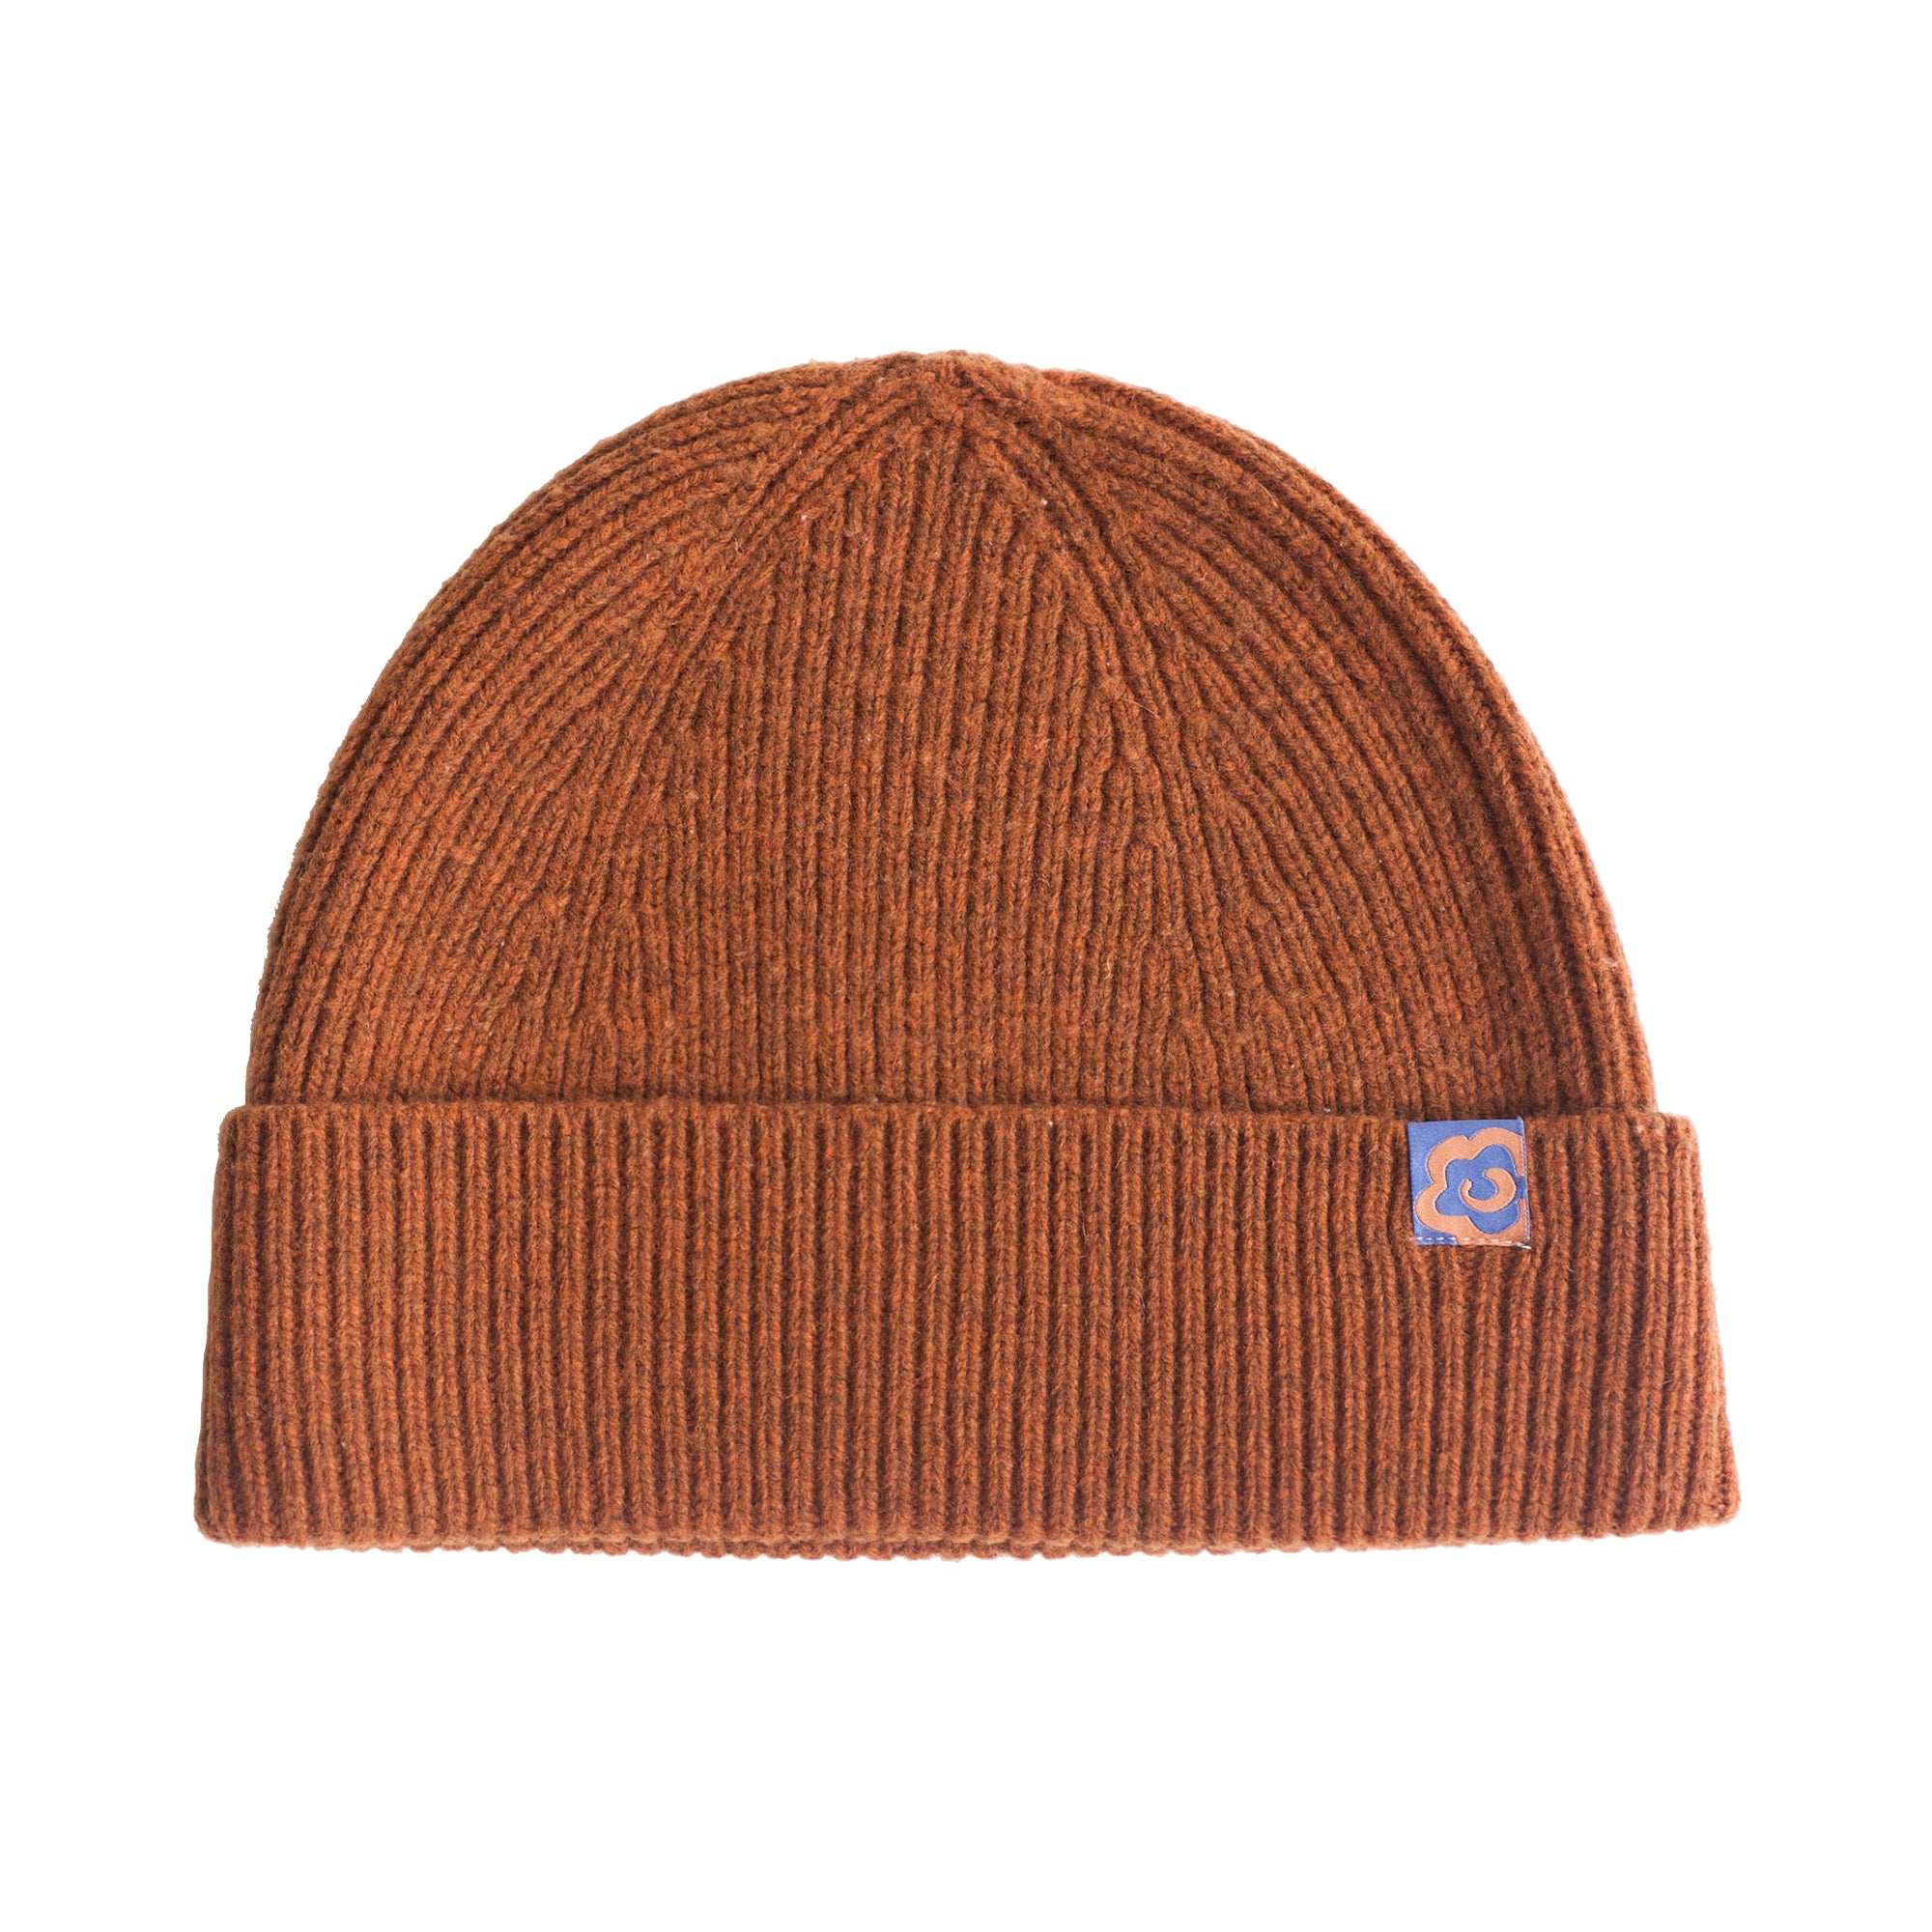 "Extra Fine Marino" Wool Knit Beanie Hat - Burnt Orange product